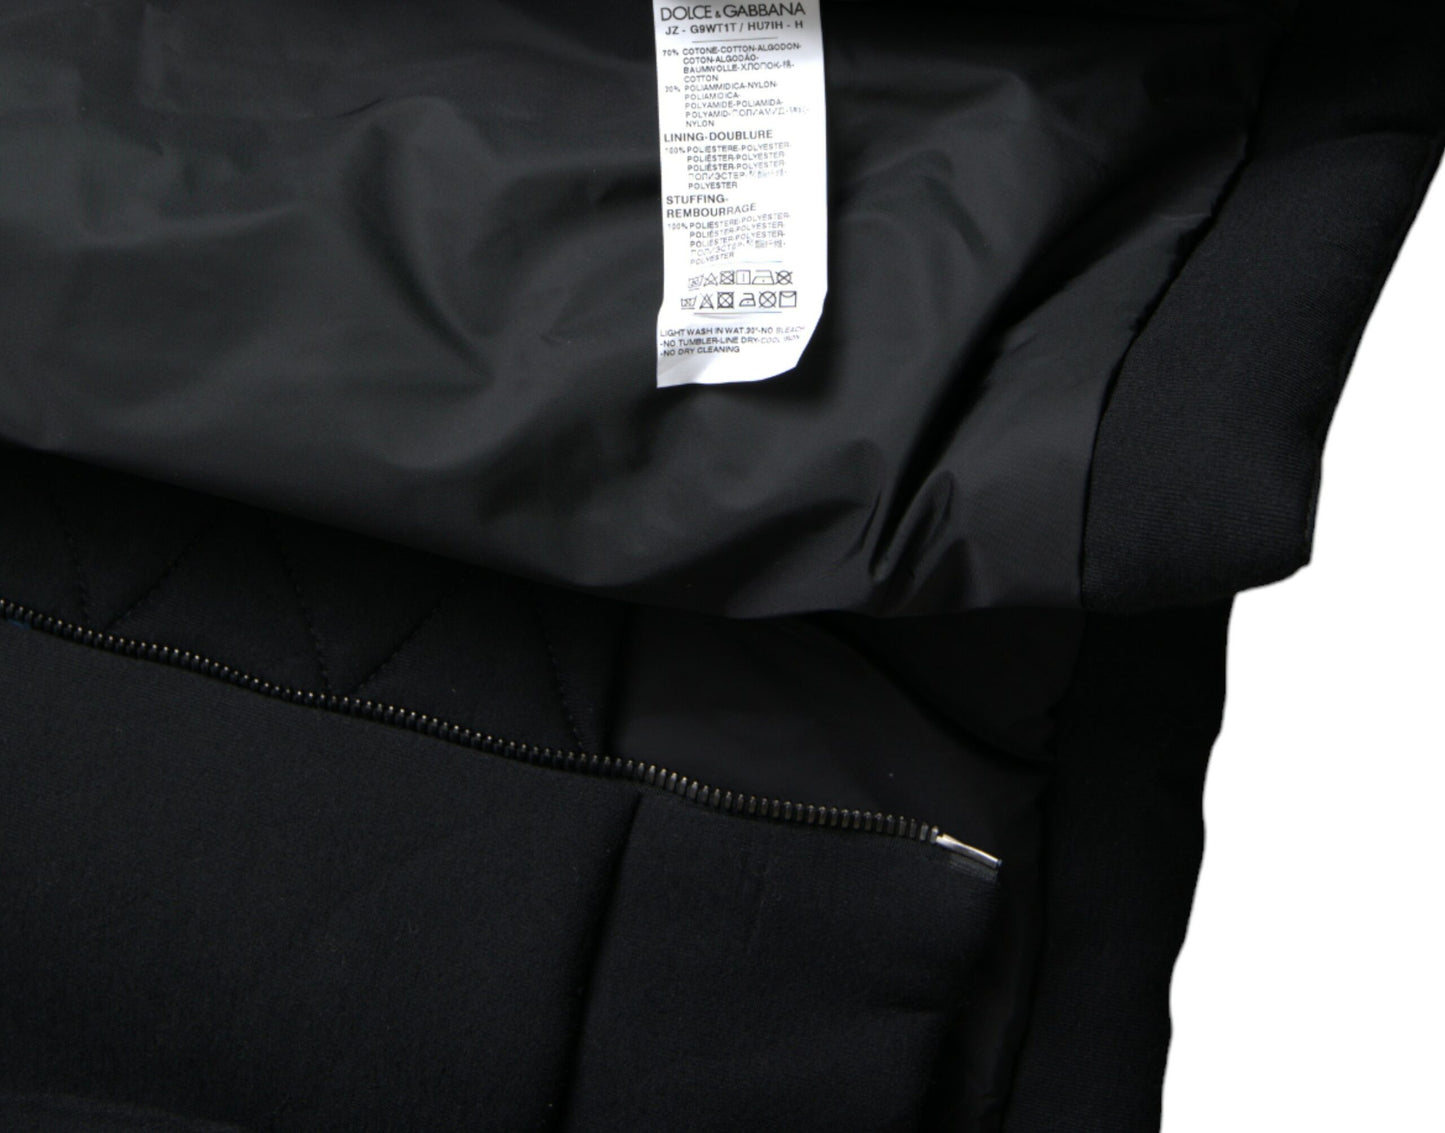 Elegant Black Bomber Jacket with Hood